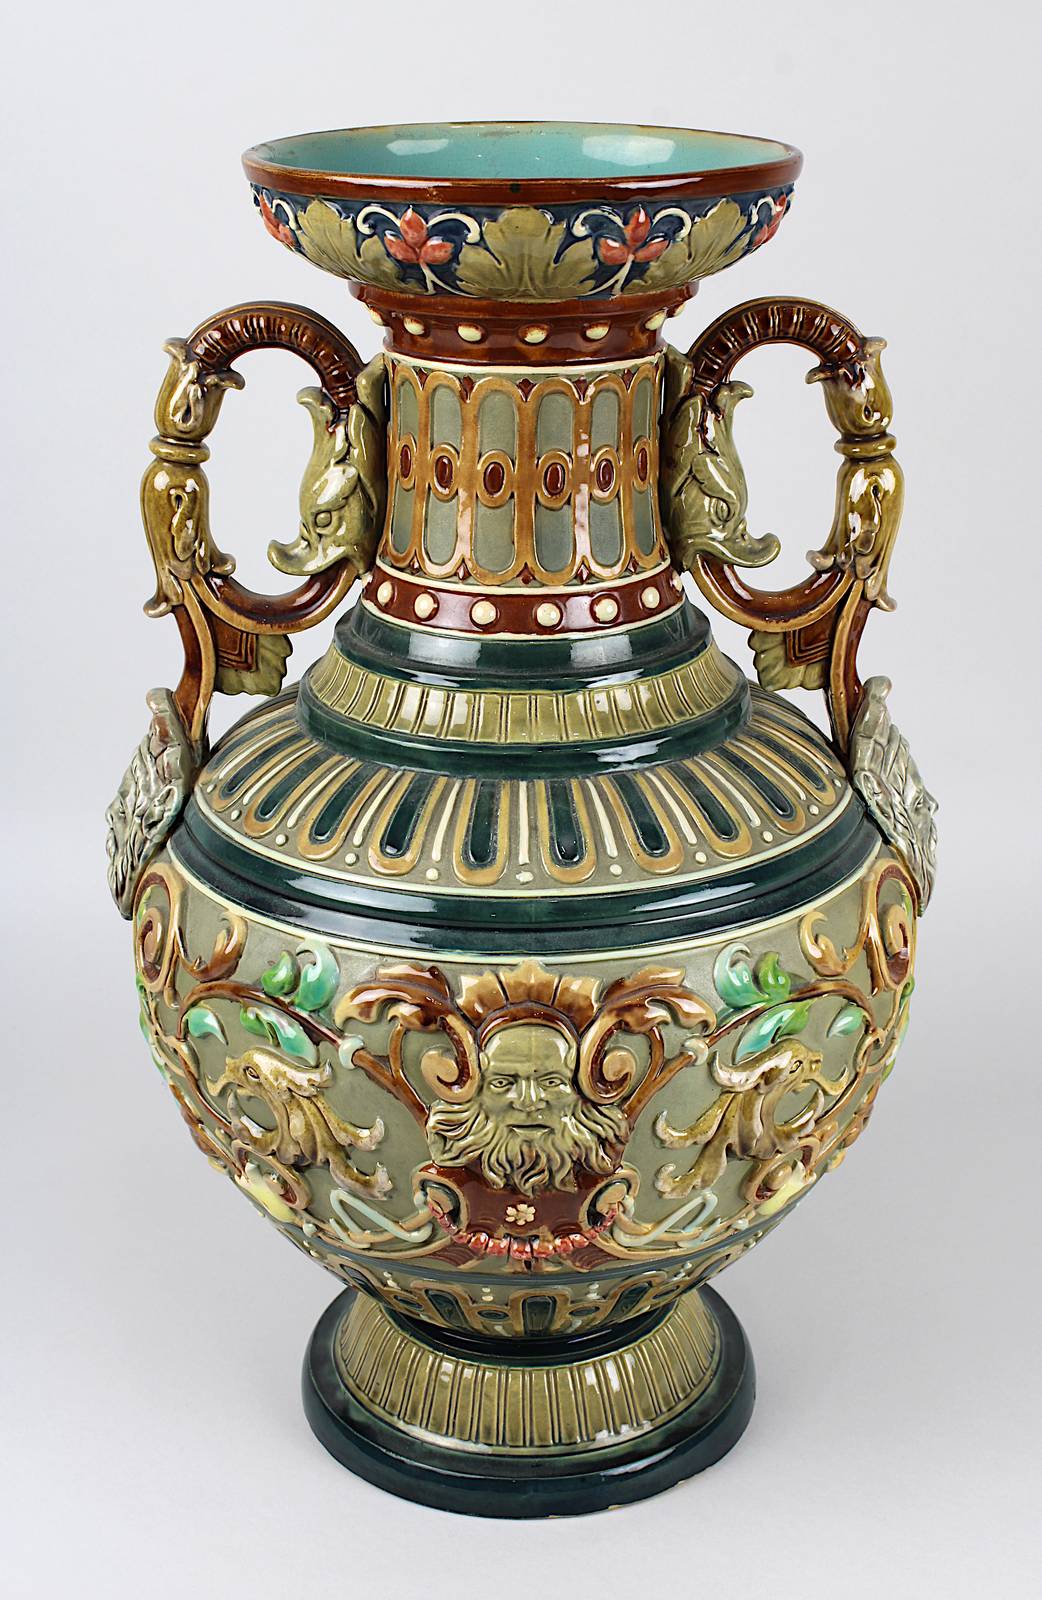 Wilhelm Schiller & Sohn Keramik Prunk-Vase, Bodenbach Böhmen um 1900, balusterförmiger Korpus,